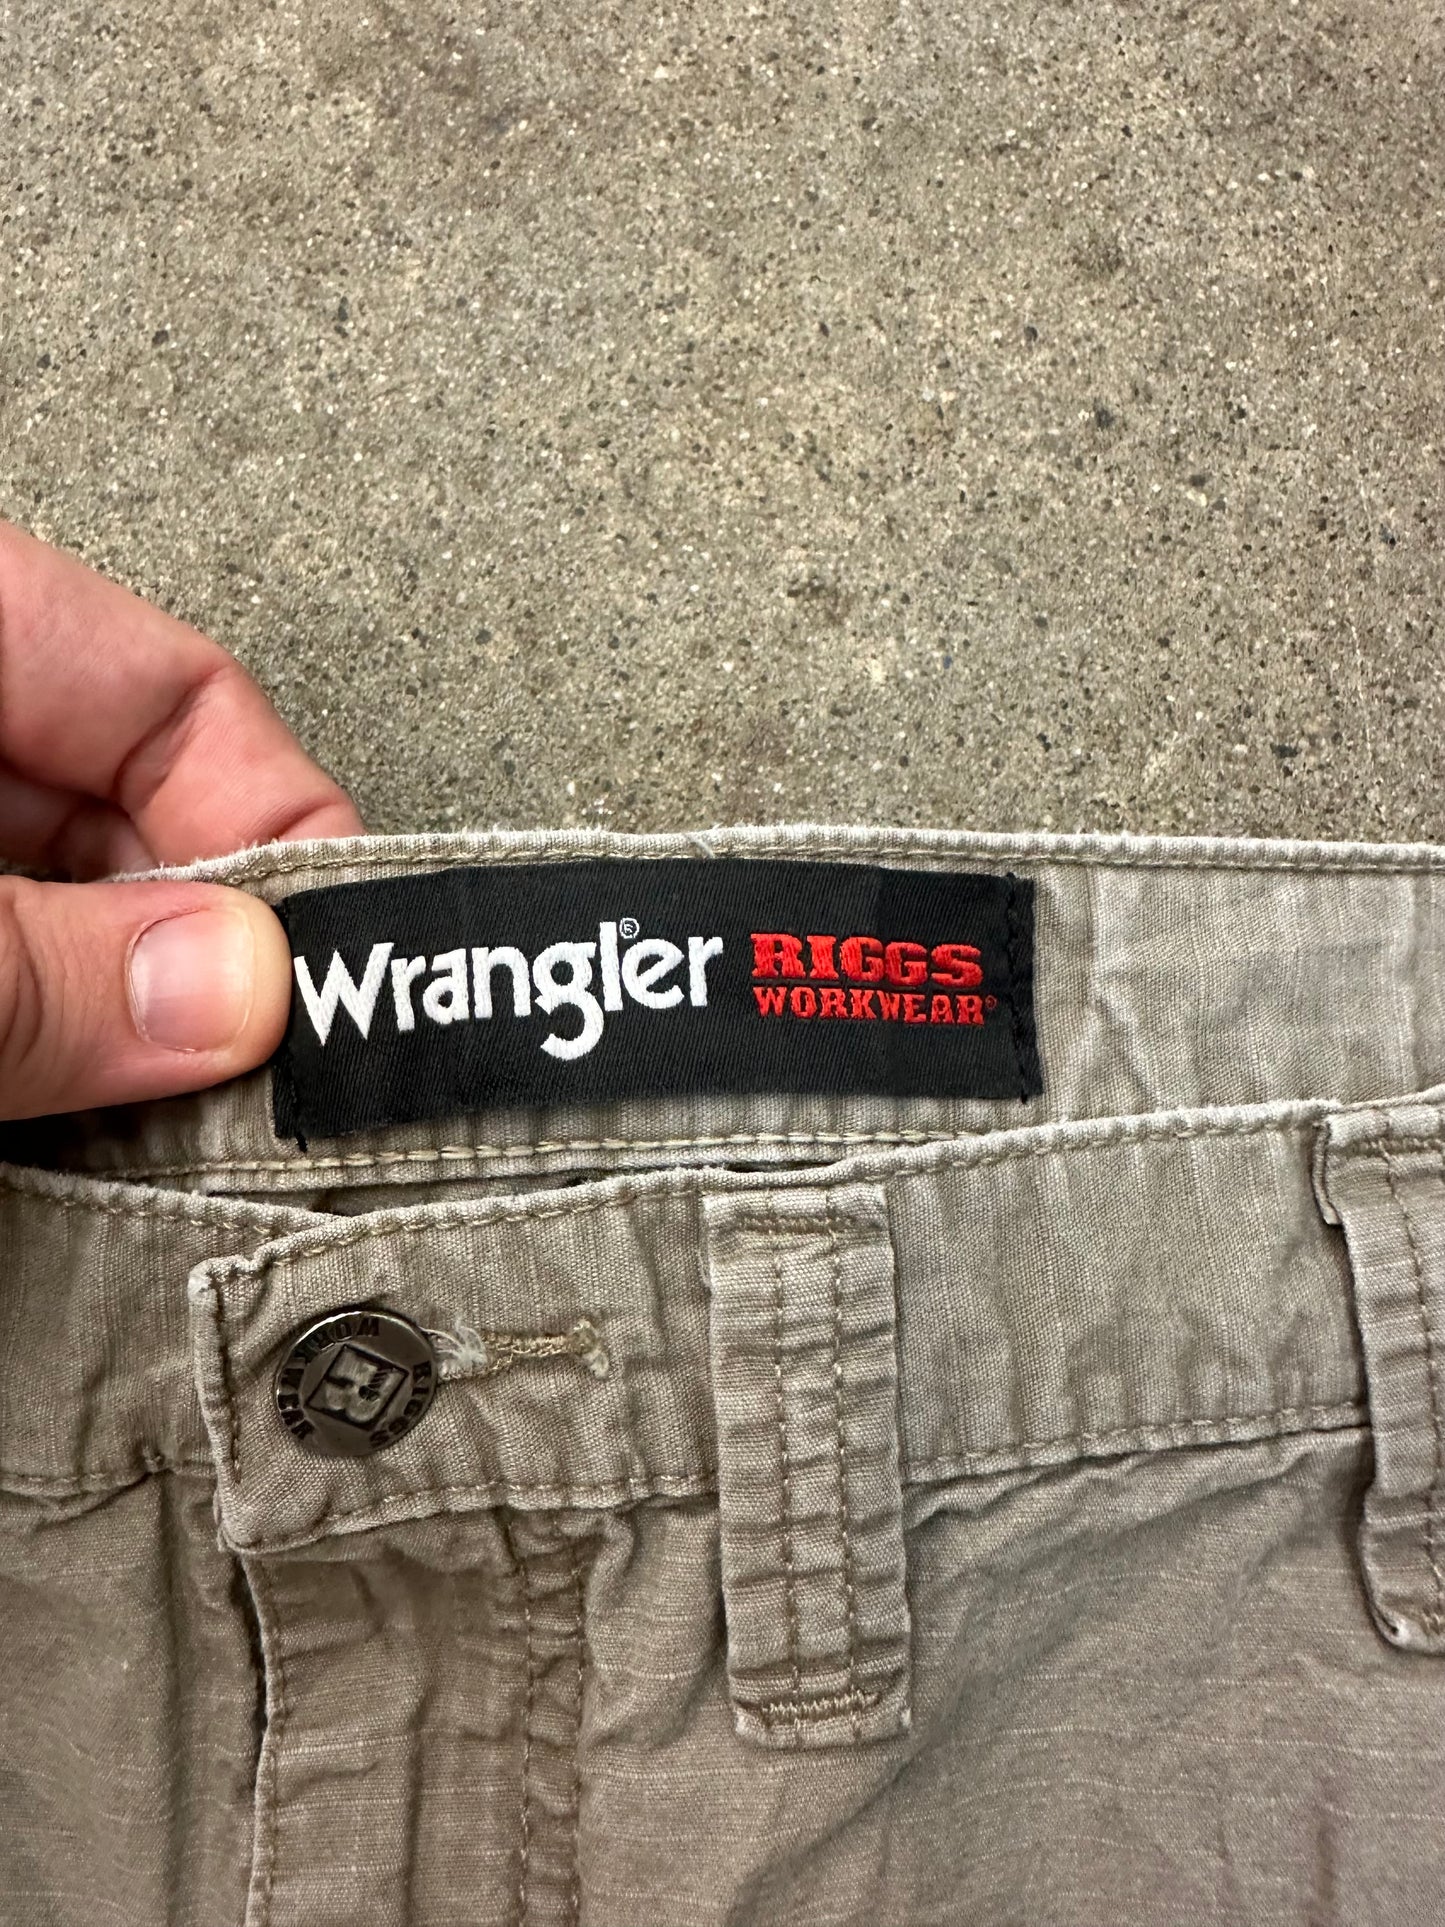 Wrangler Riggs Carpenter Workwear Pants - 44